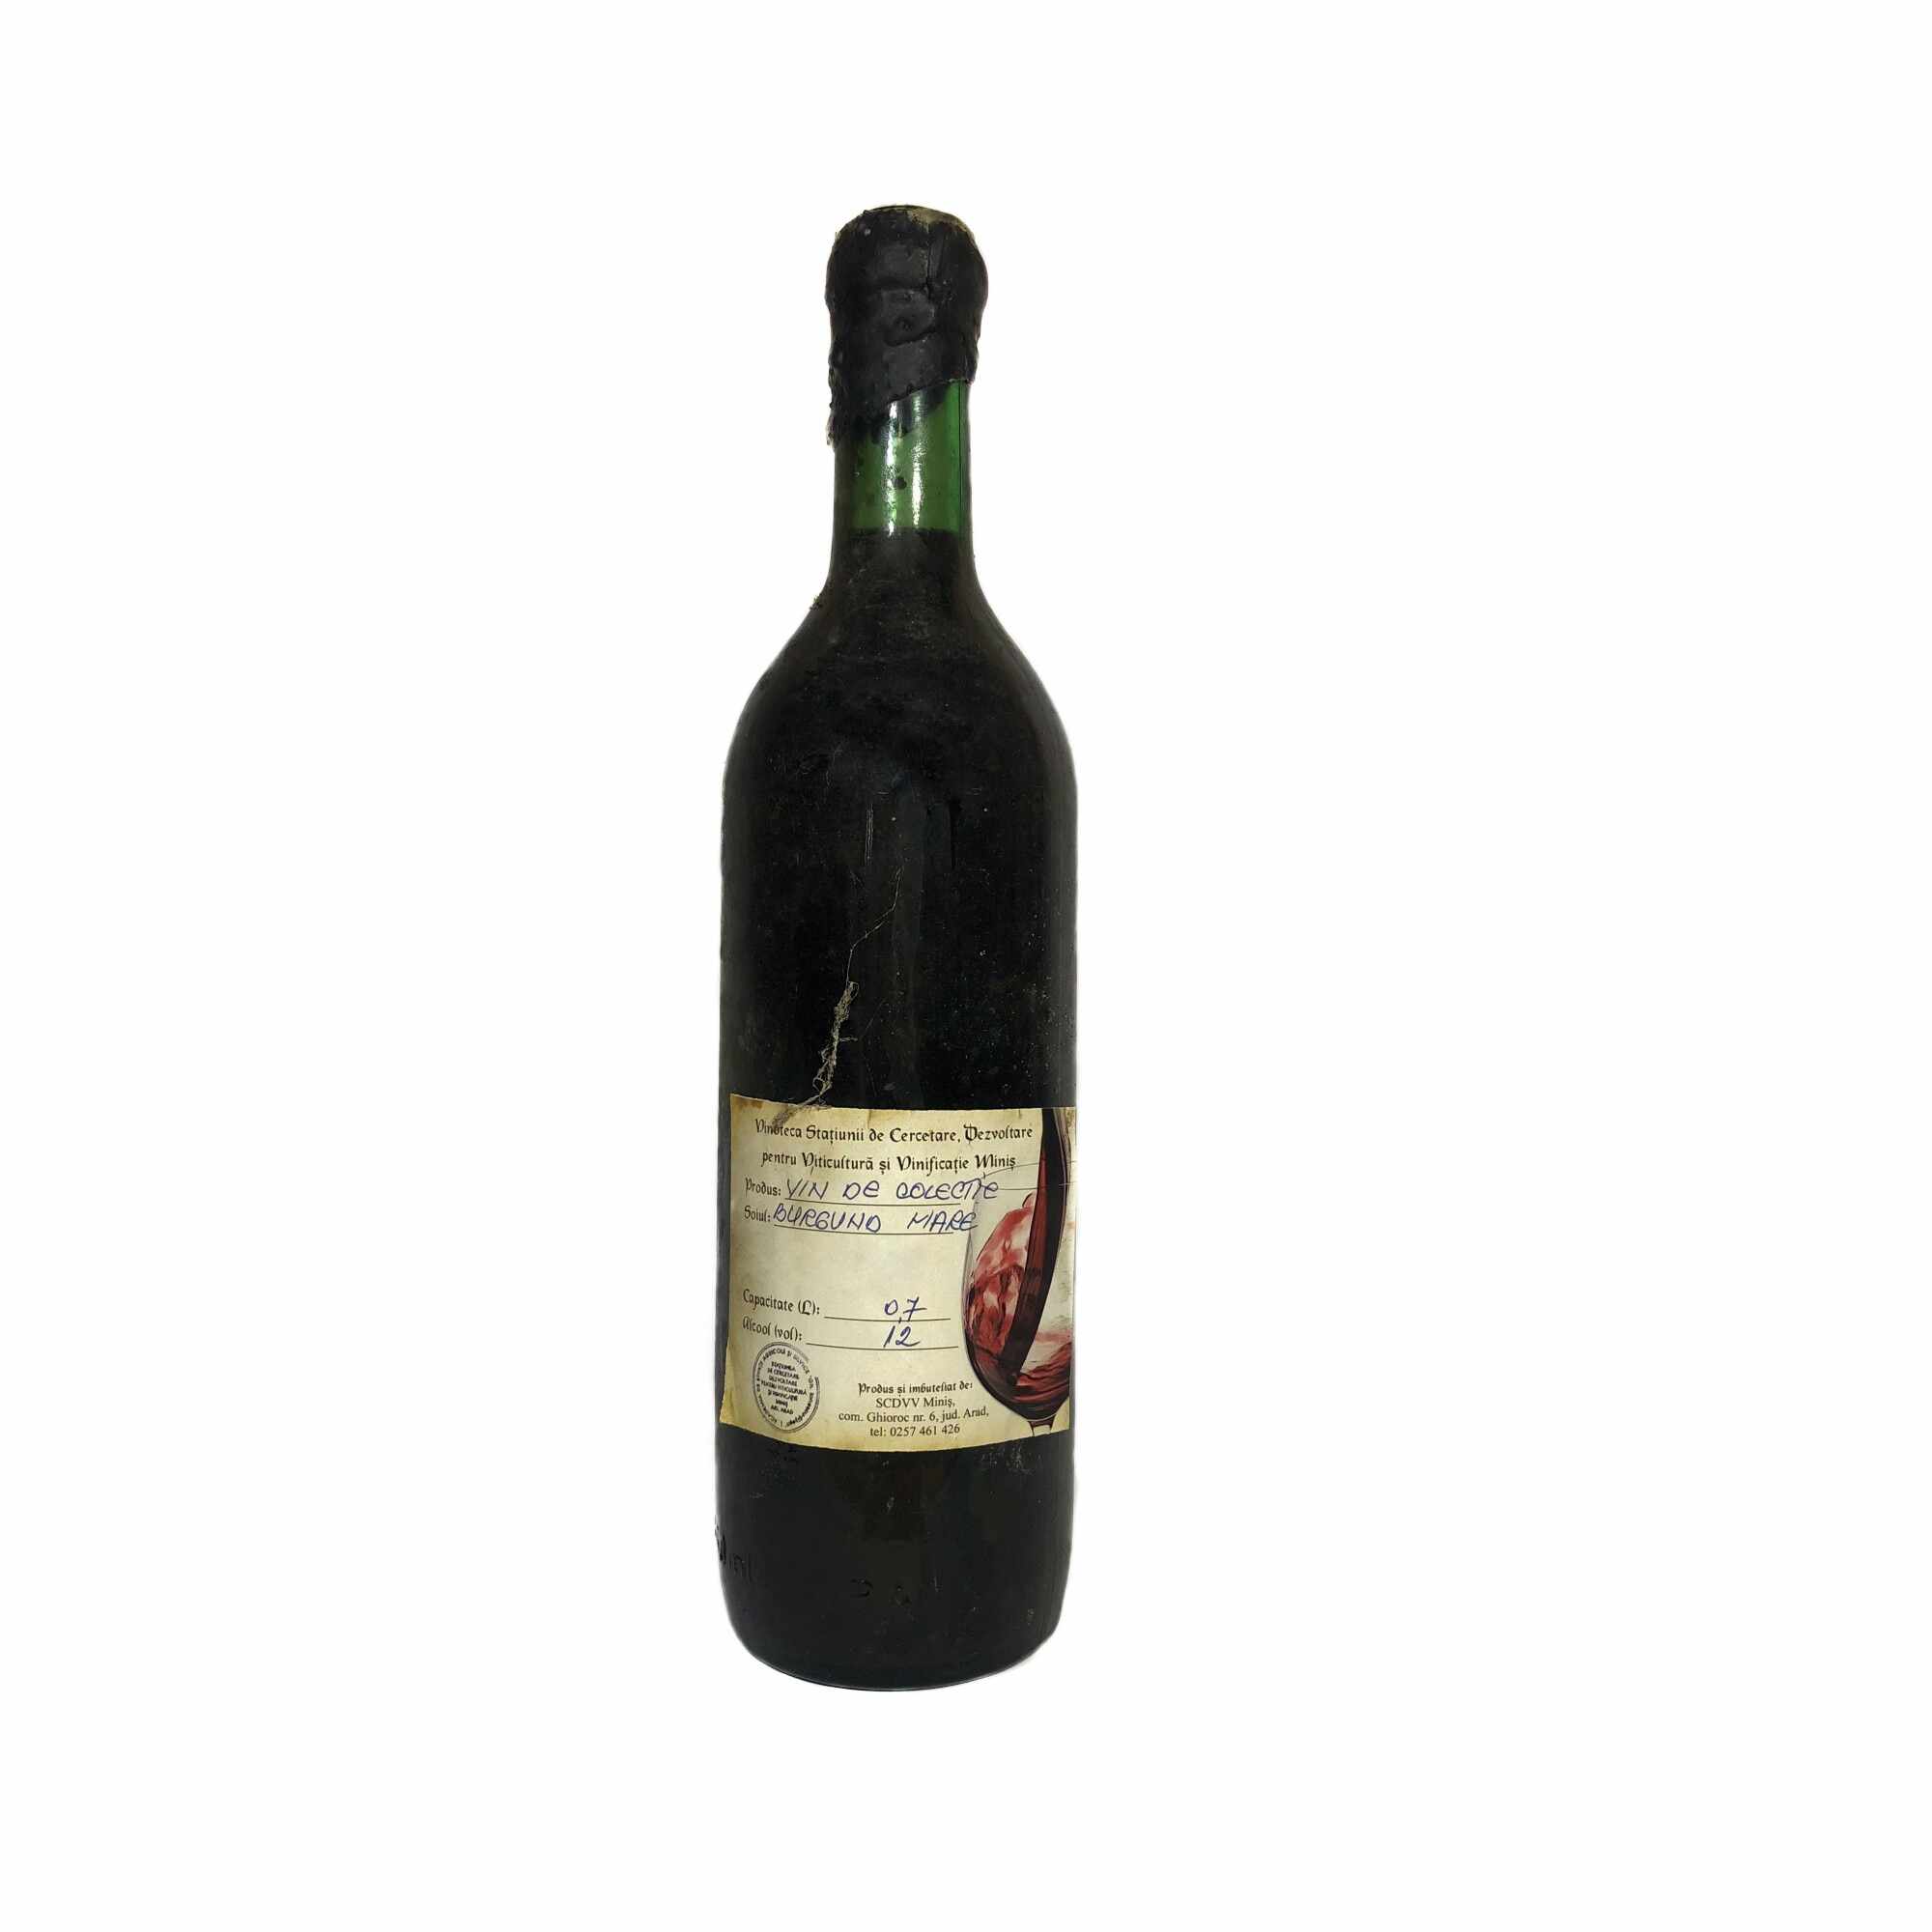 Vin rosu de colectie Burgund - Anul 1993 in cutie de lemn, 700 ml